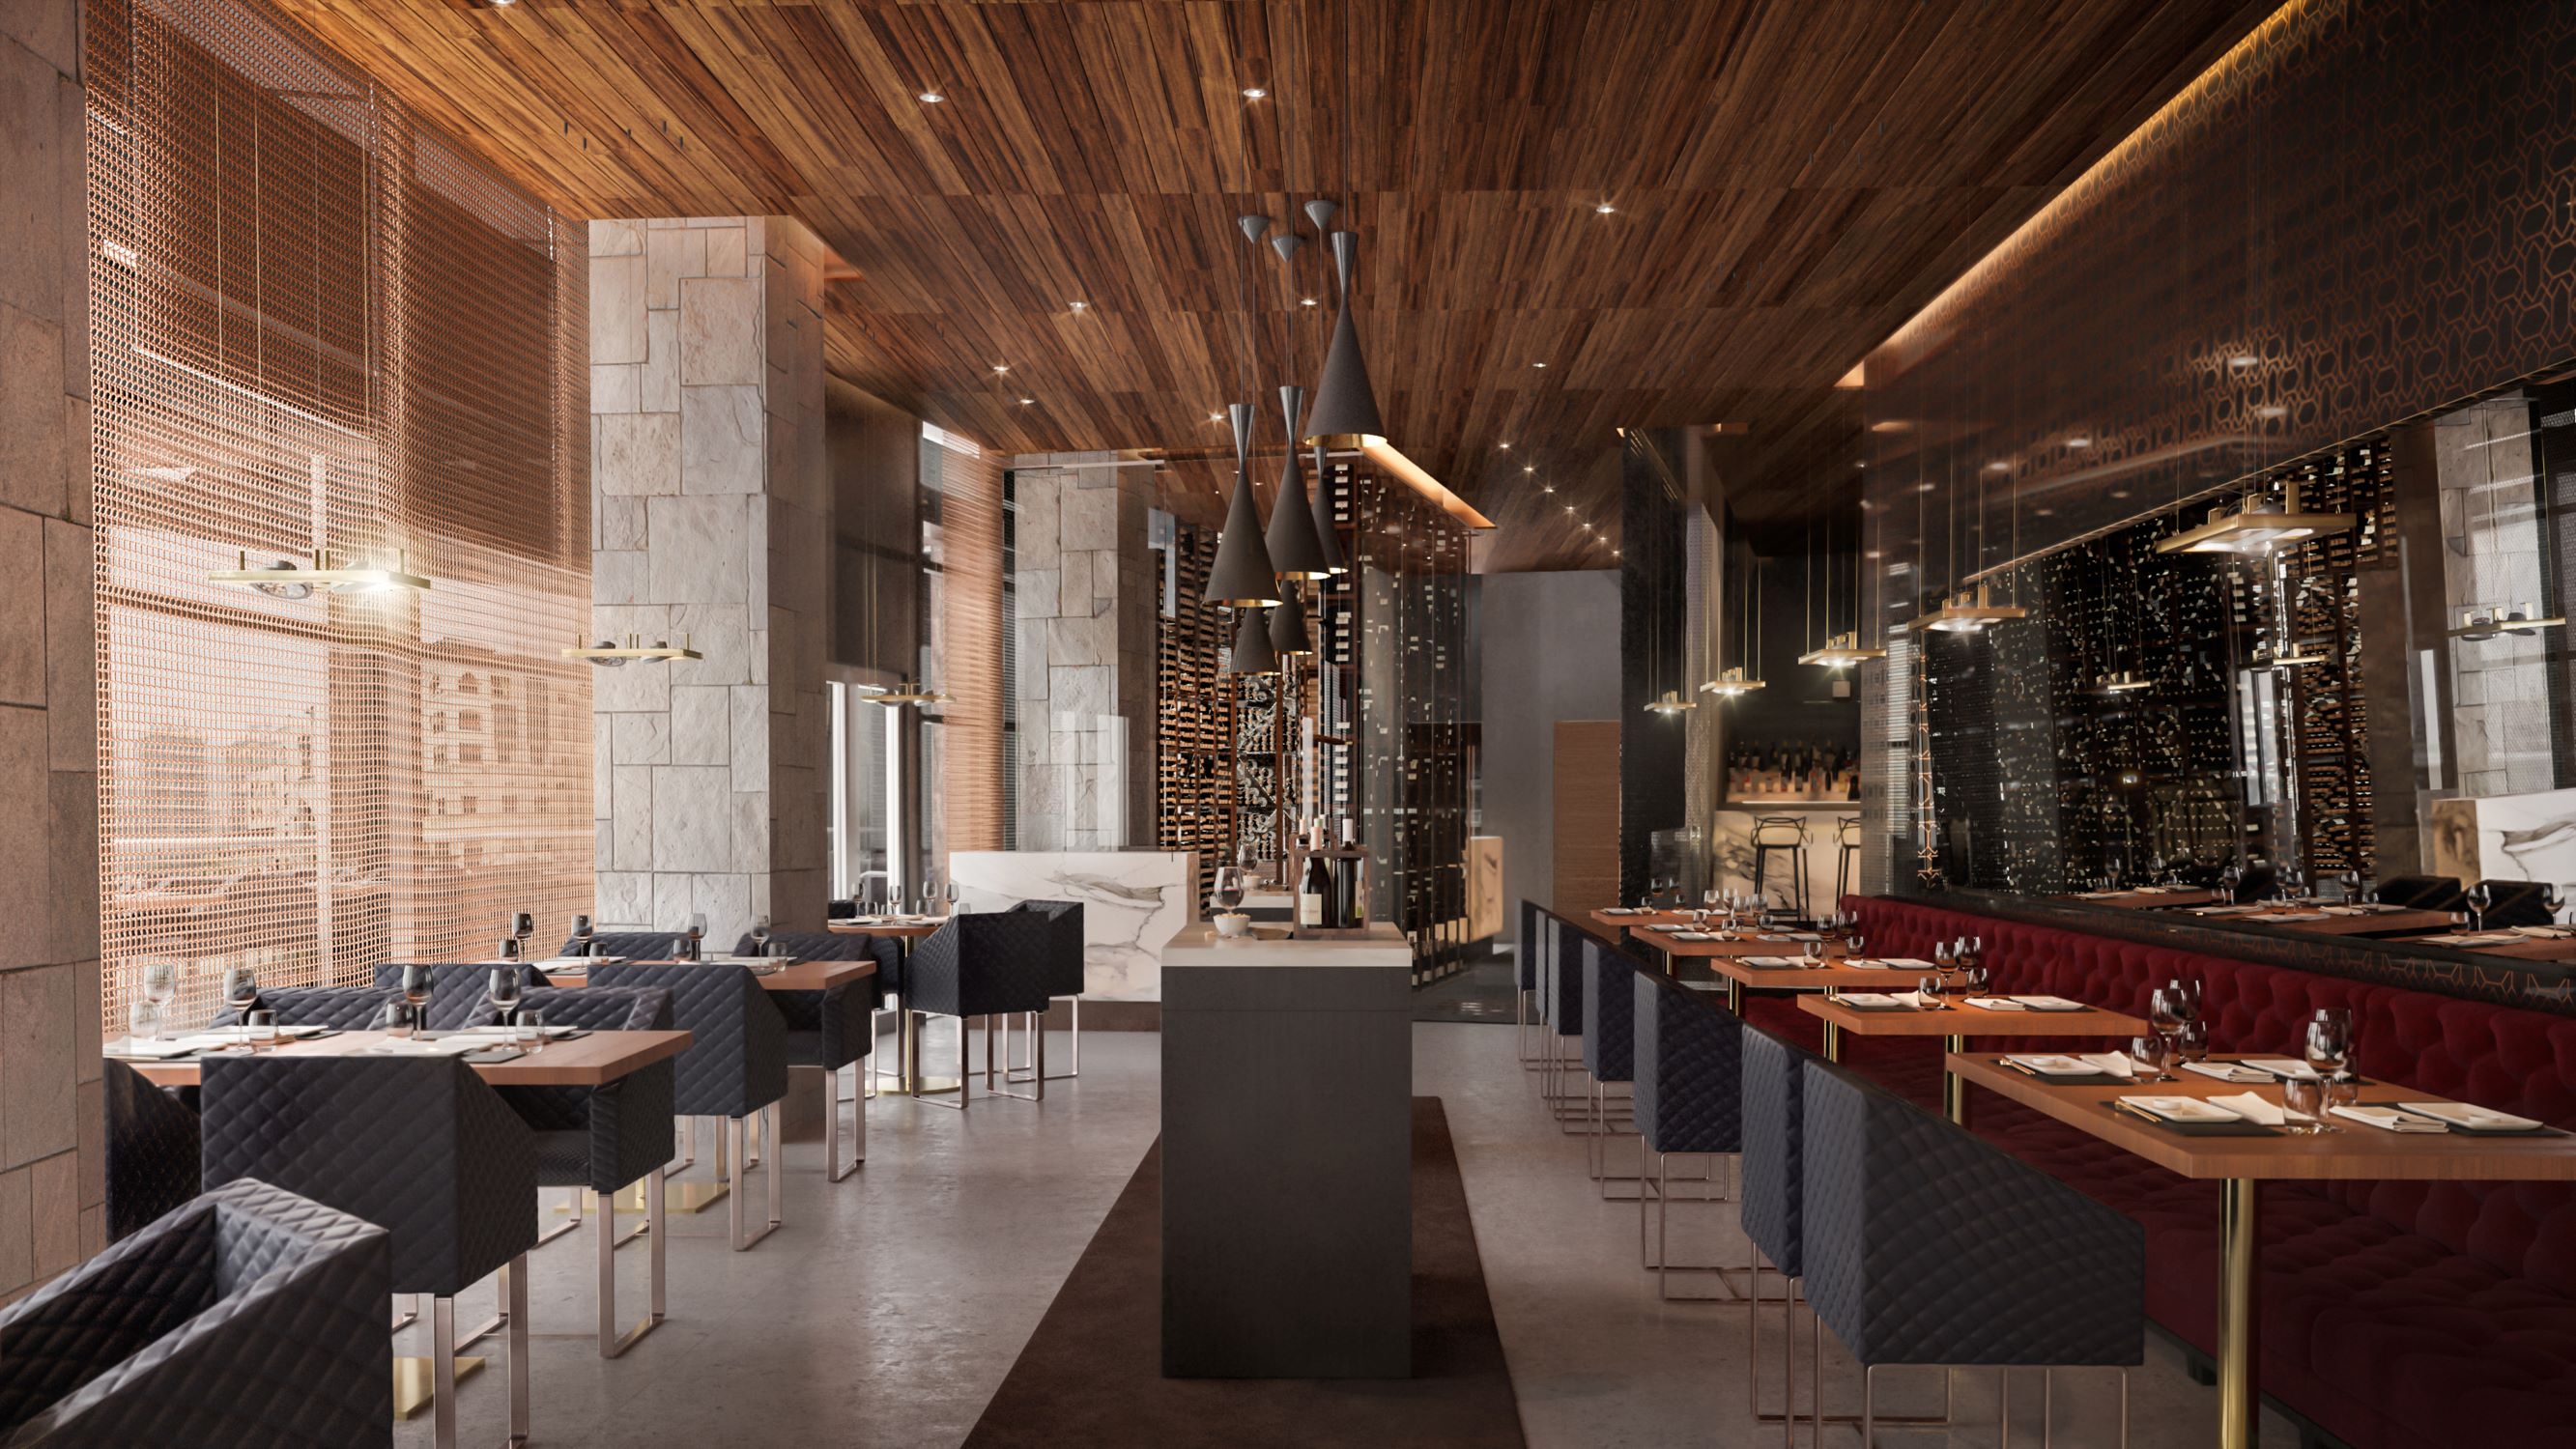 99 Sushi Bar & Restaurant prepares to open in Dubai's Address Downtown